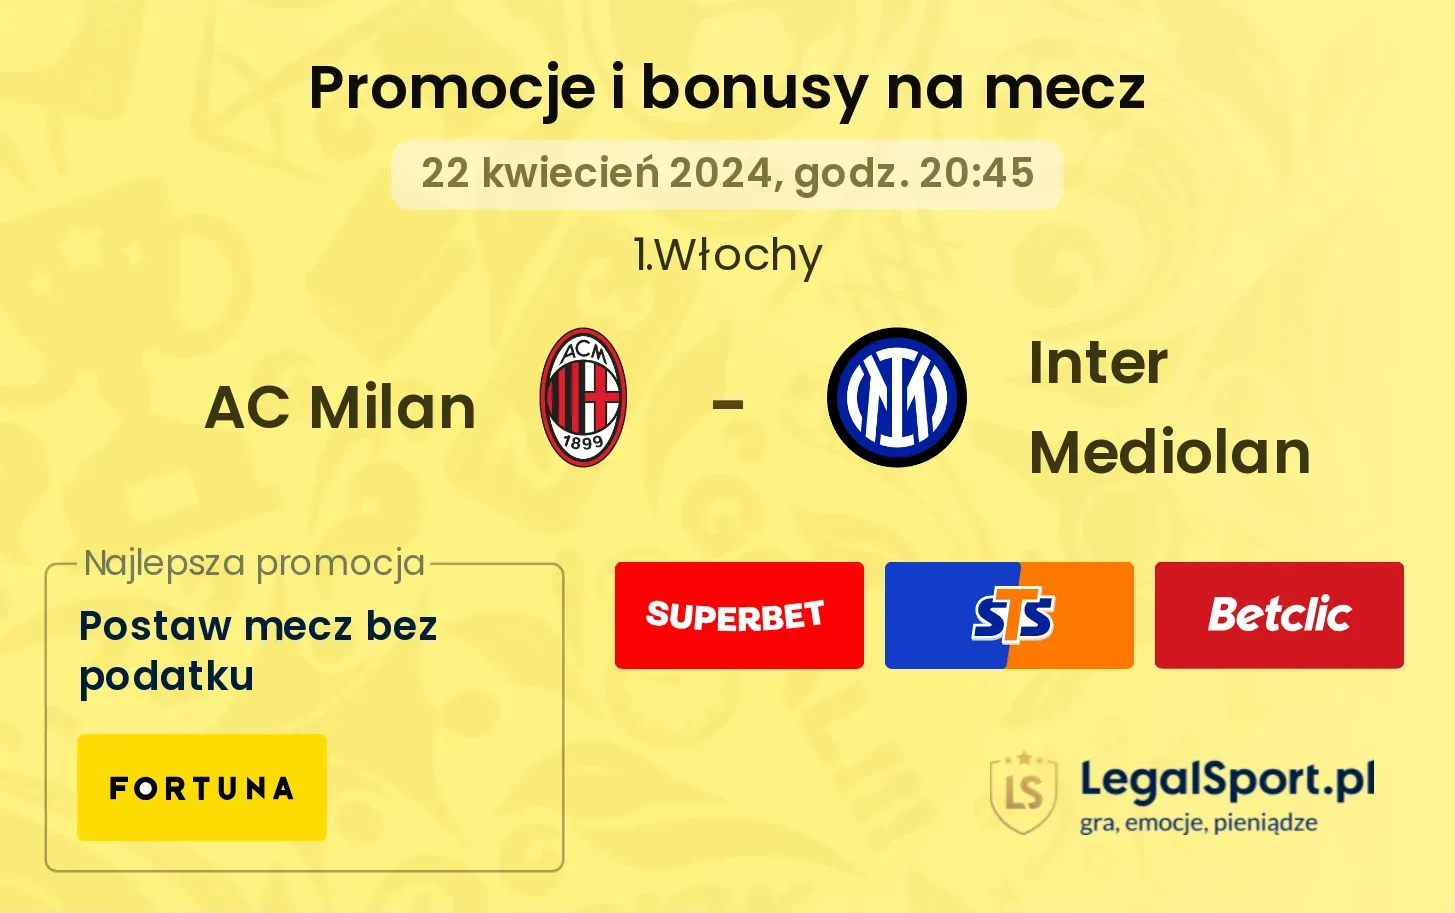 AC Milan - Inter Mediolan promocje i bonusy (22.04, 20:45)